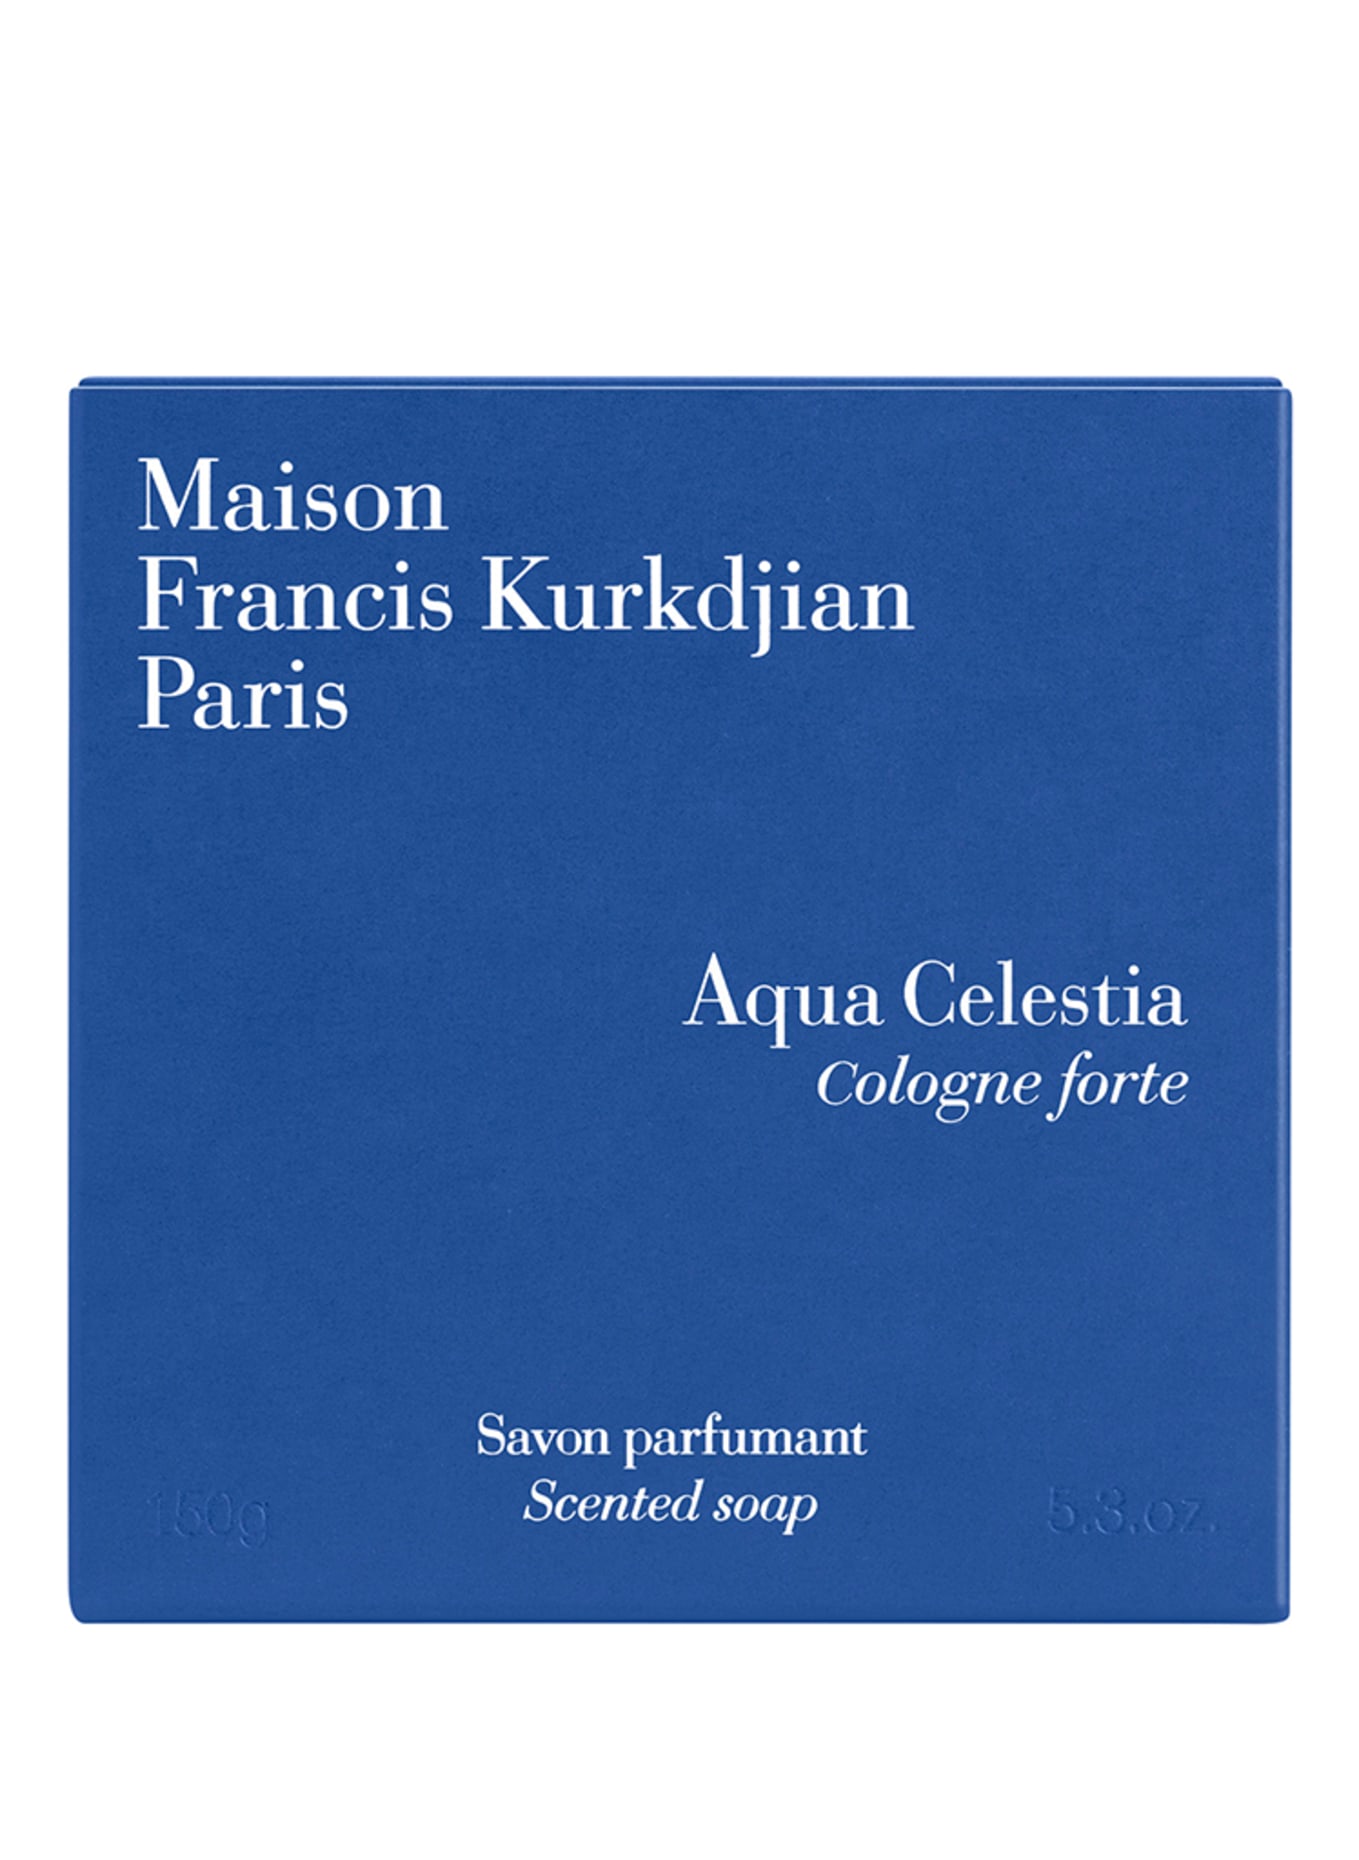 Maison Francis Kurkdjian Paris AQUA CELESTIA COLOGNE FORTE (Obrazek 2)